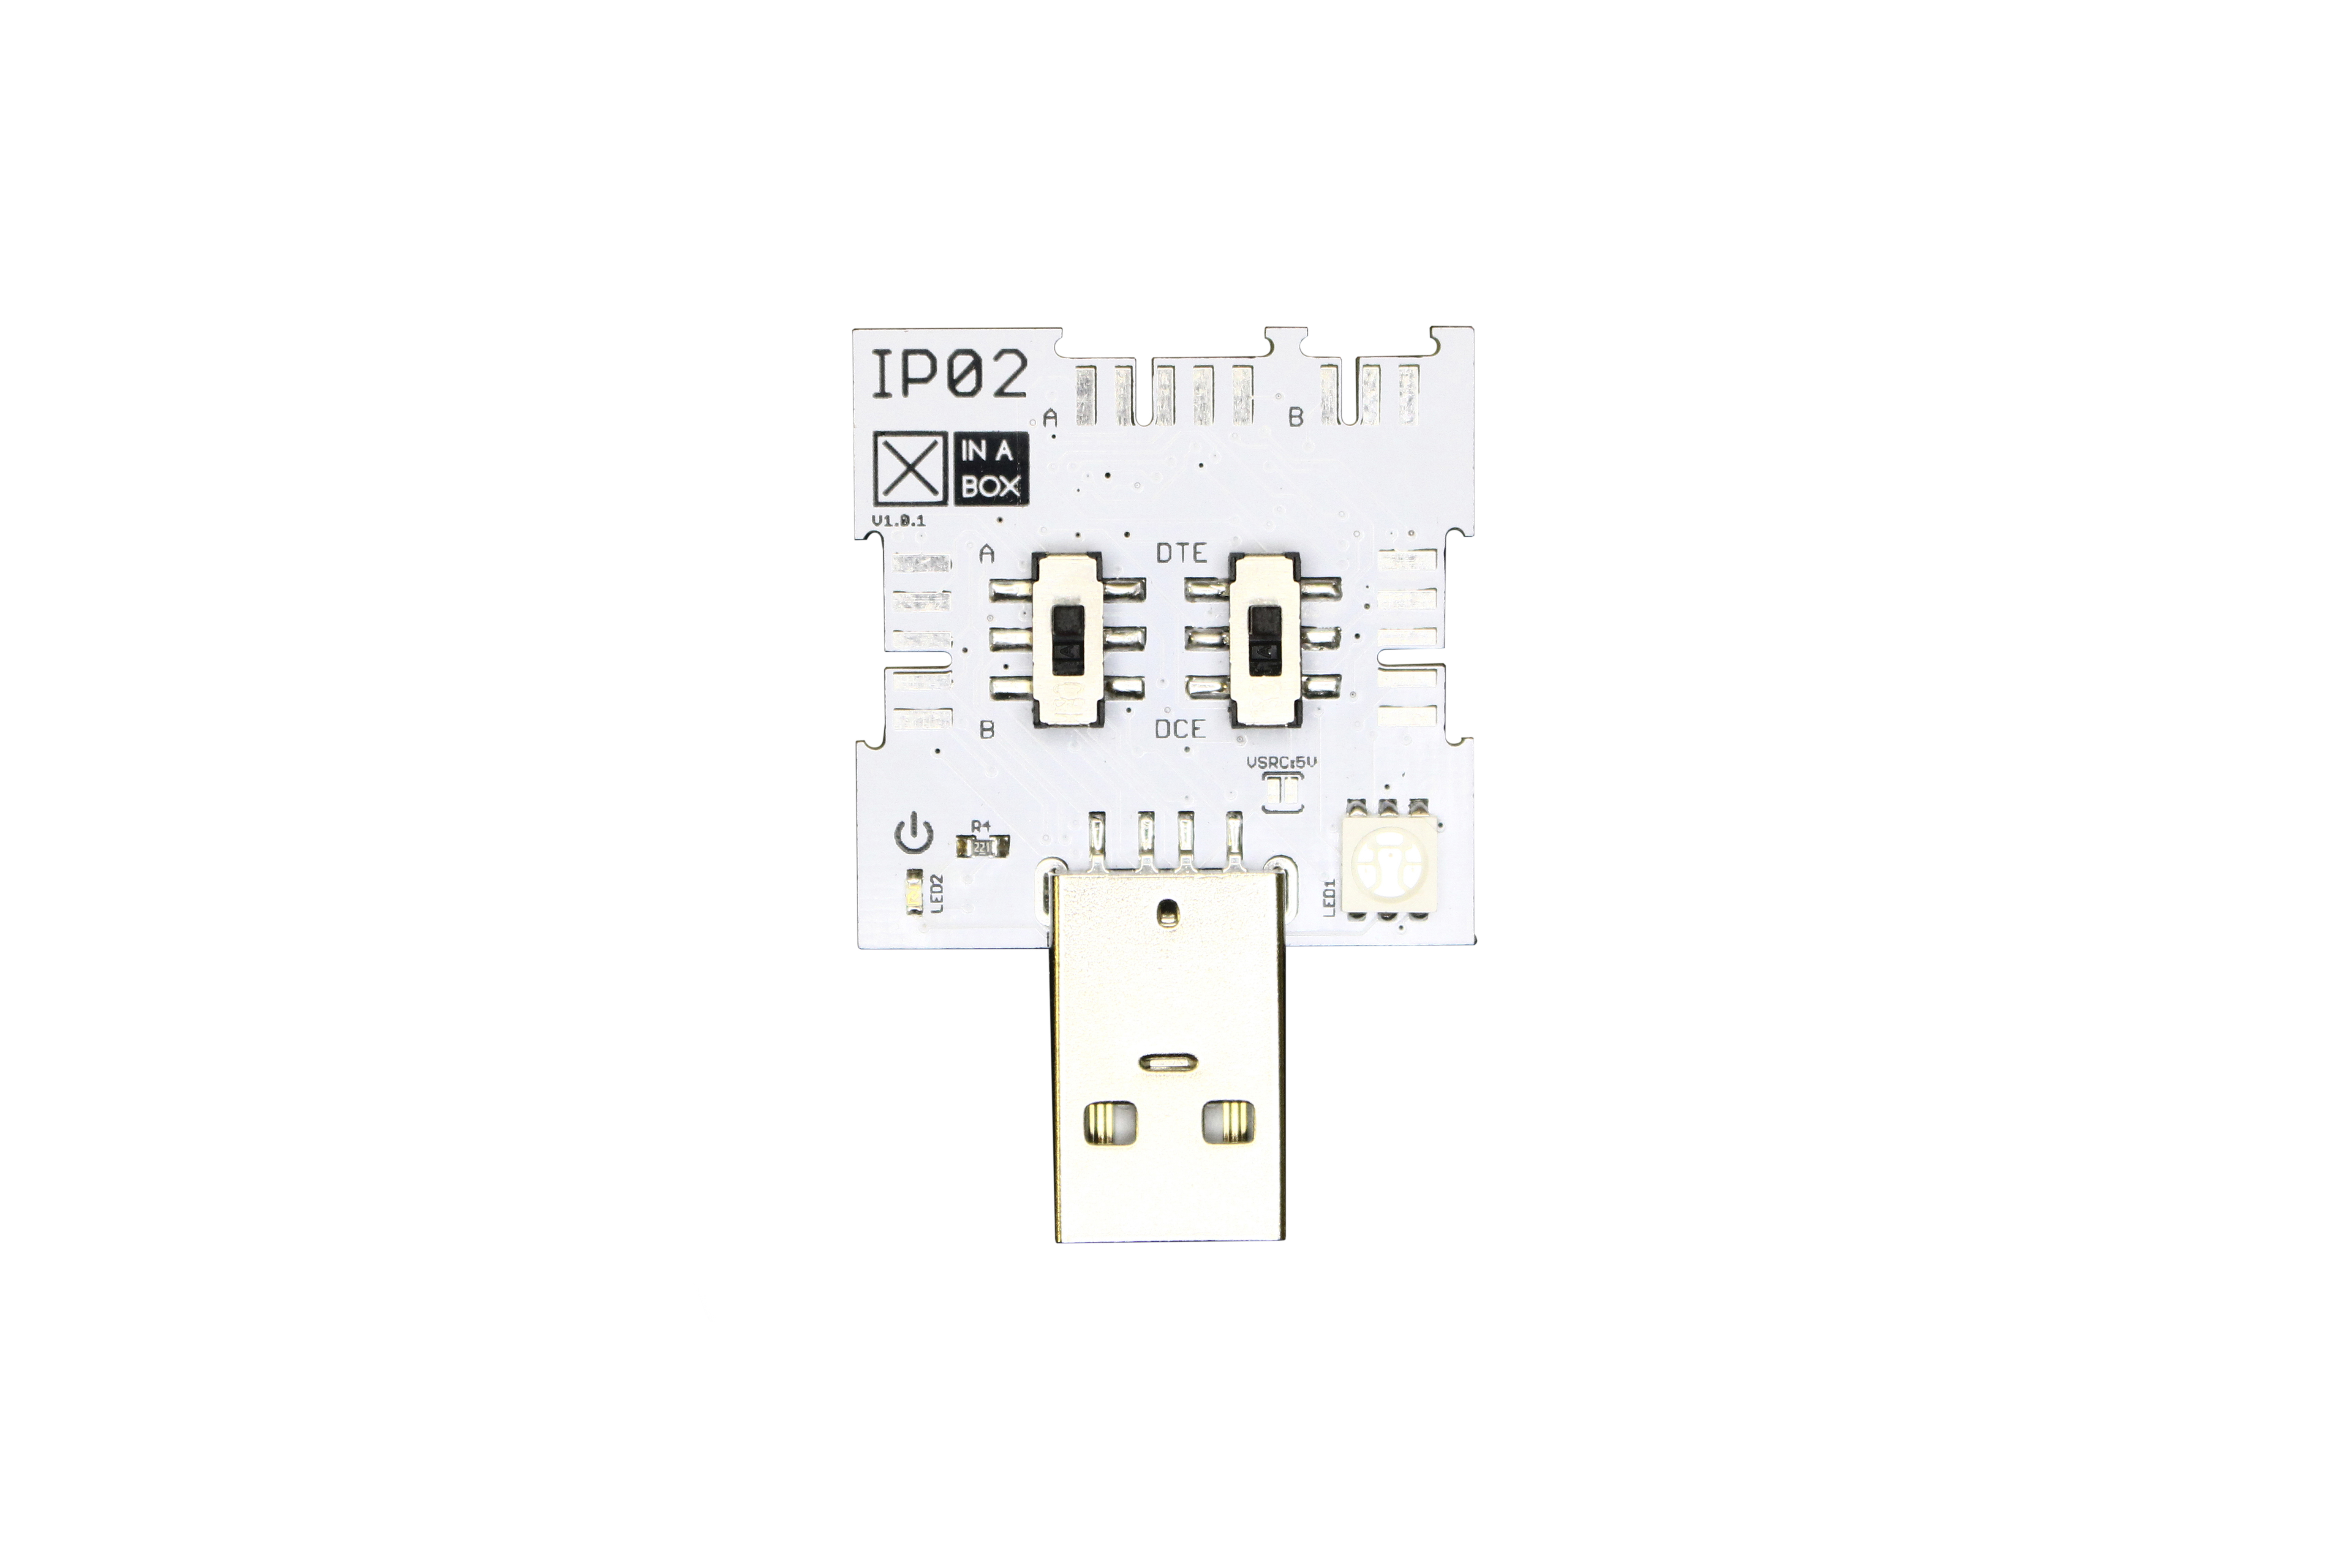 Xinabox Ip02 - Advanced USB Programming Interface (Ft232R)